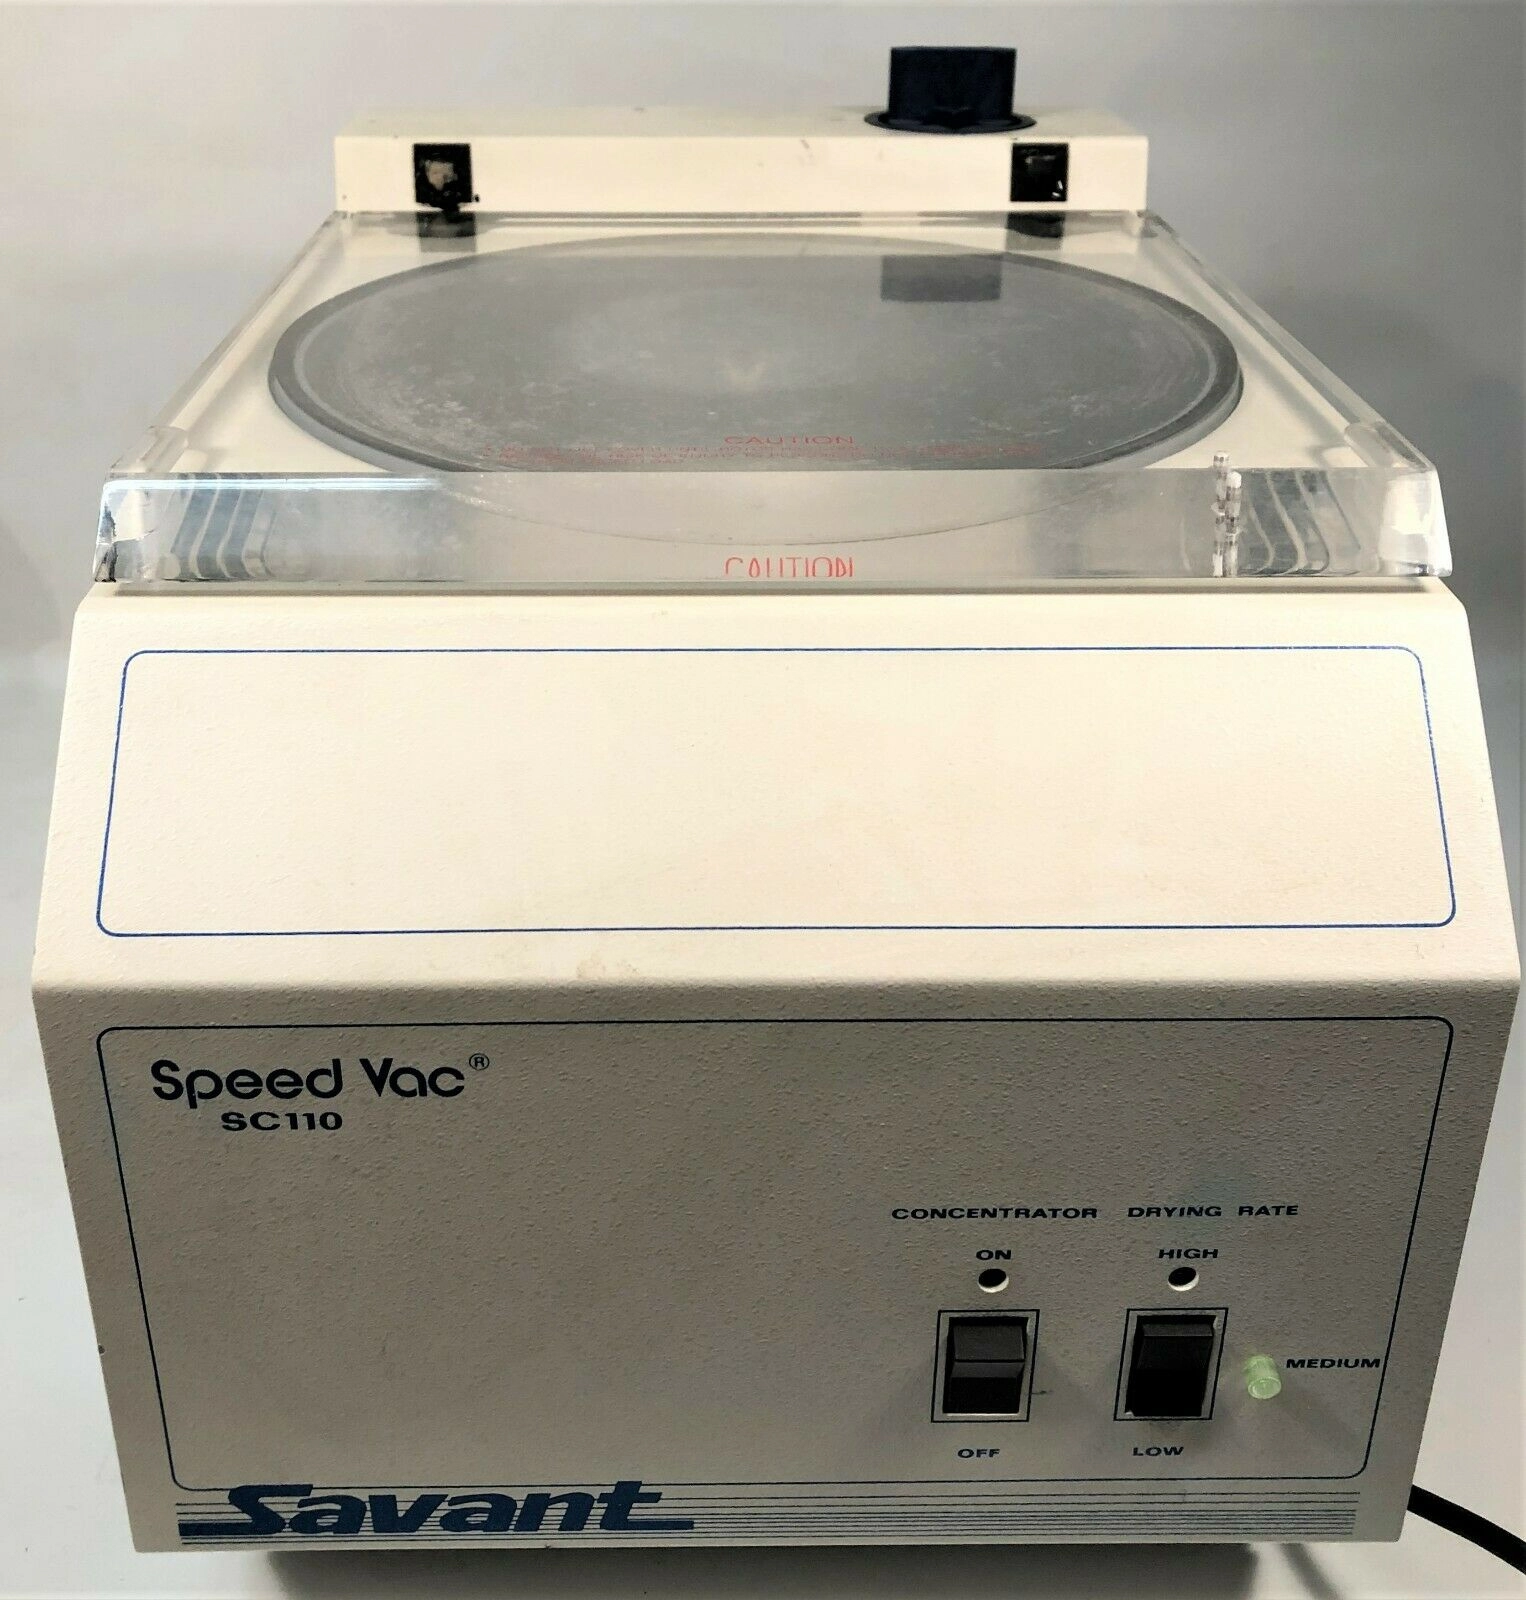 Savant SpeedVac SC110 Centrifugal Concentrator with RH40-12 Rotor - 40 x 5mL